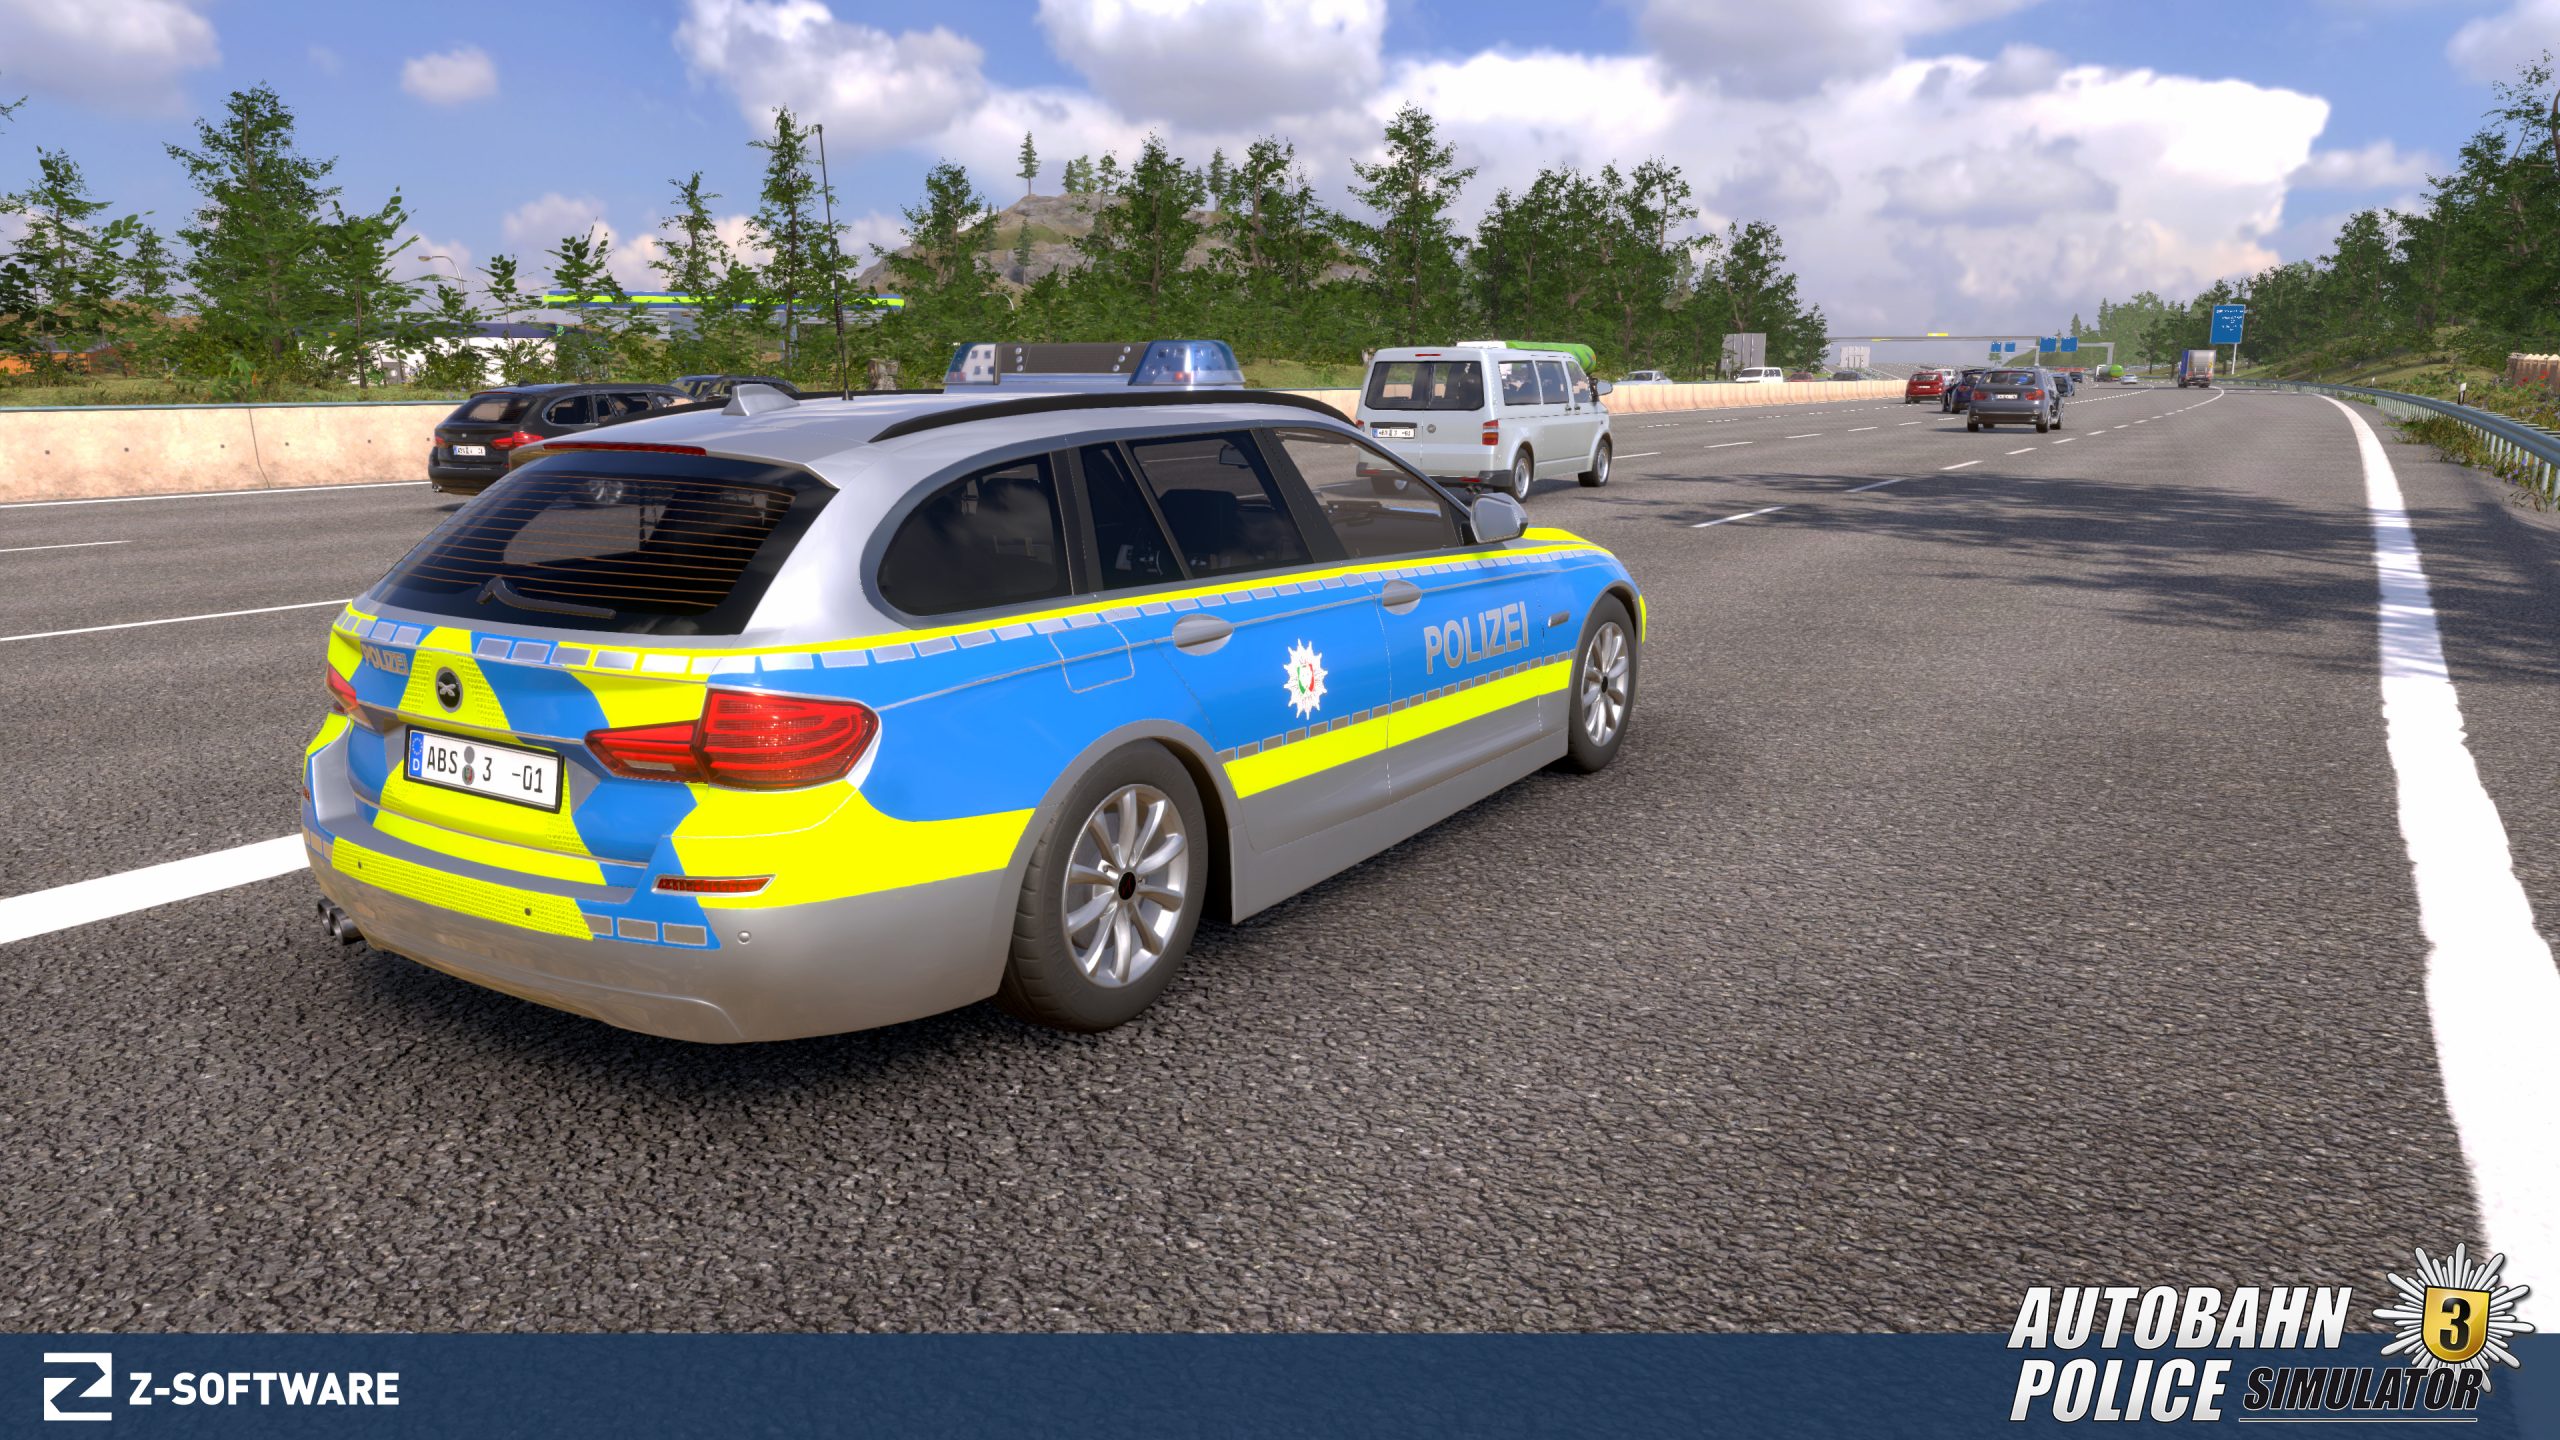 autobahn police simulator